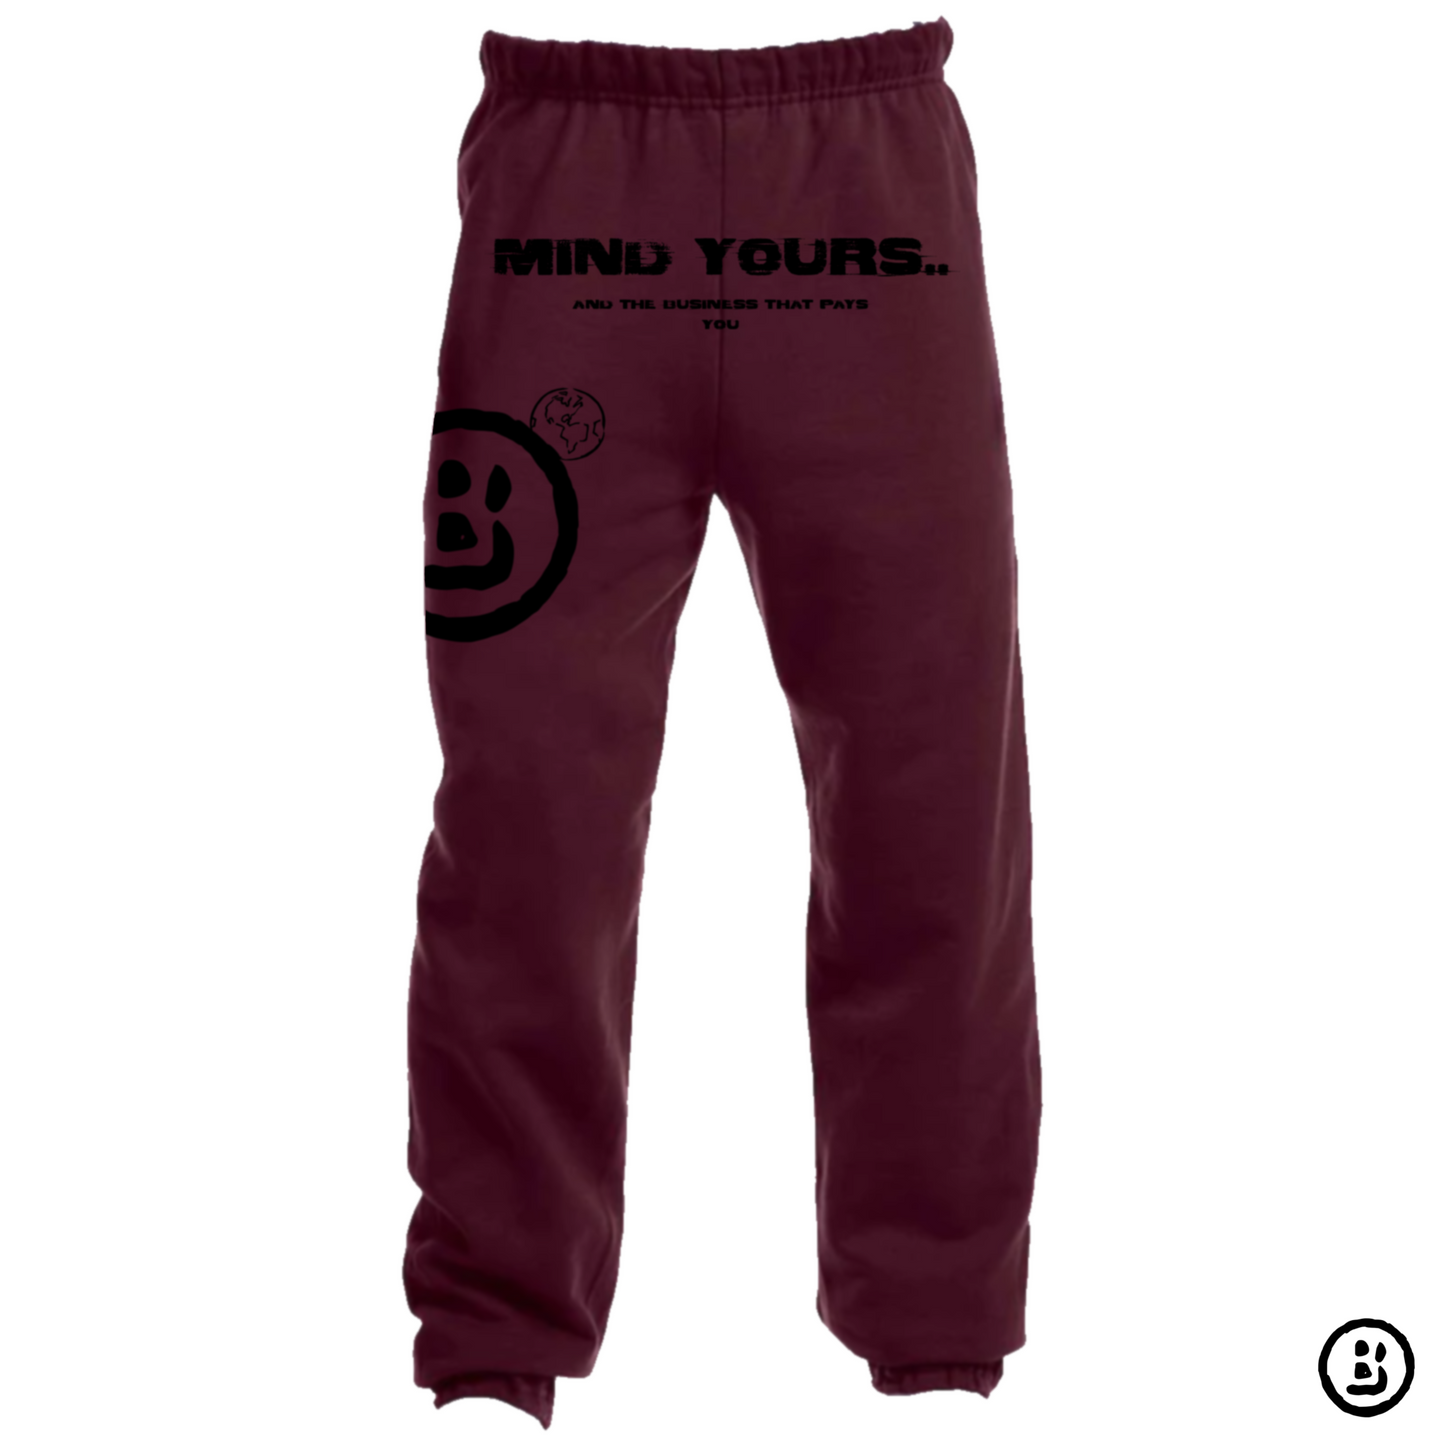 “UHTF” Maroon Cuffed Sweatpants